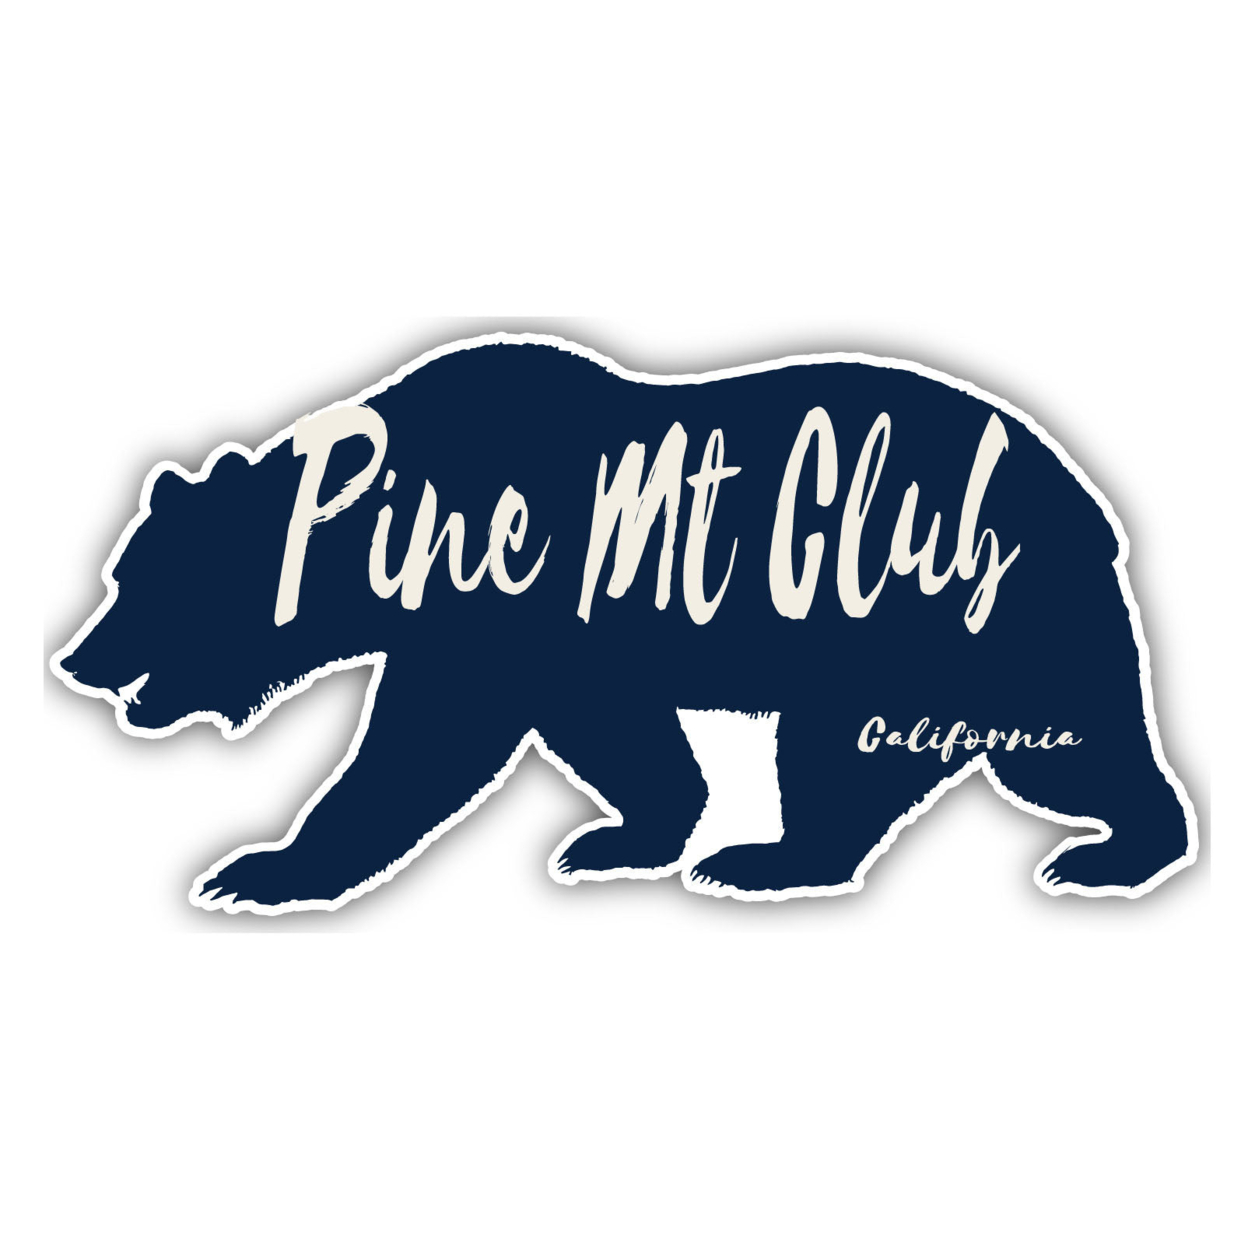 Pine Mt Club California Souvenir Decorative Stickers (Choose Theme And Size) - Single Unit, 2-Inch, Bear